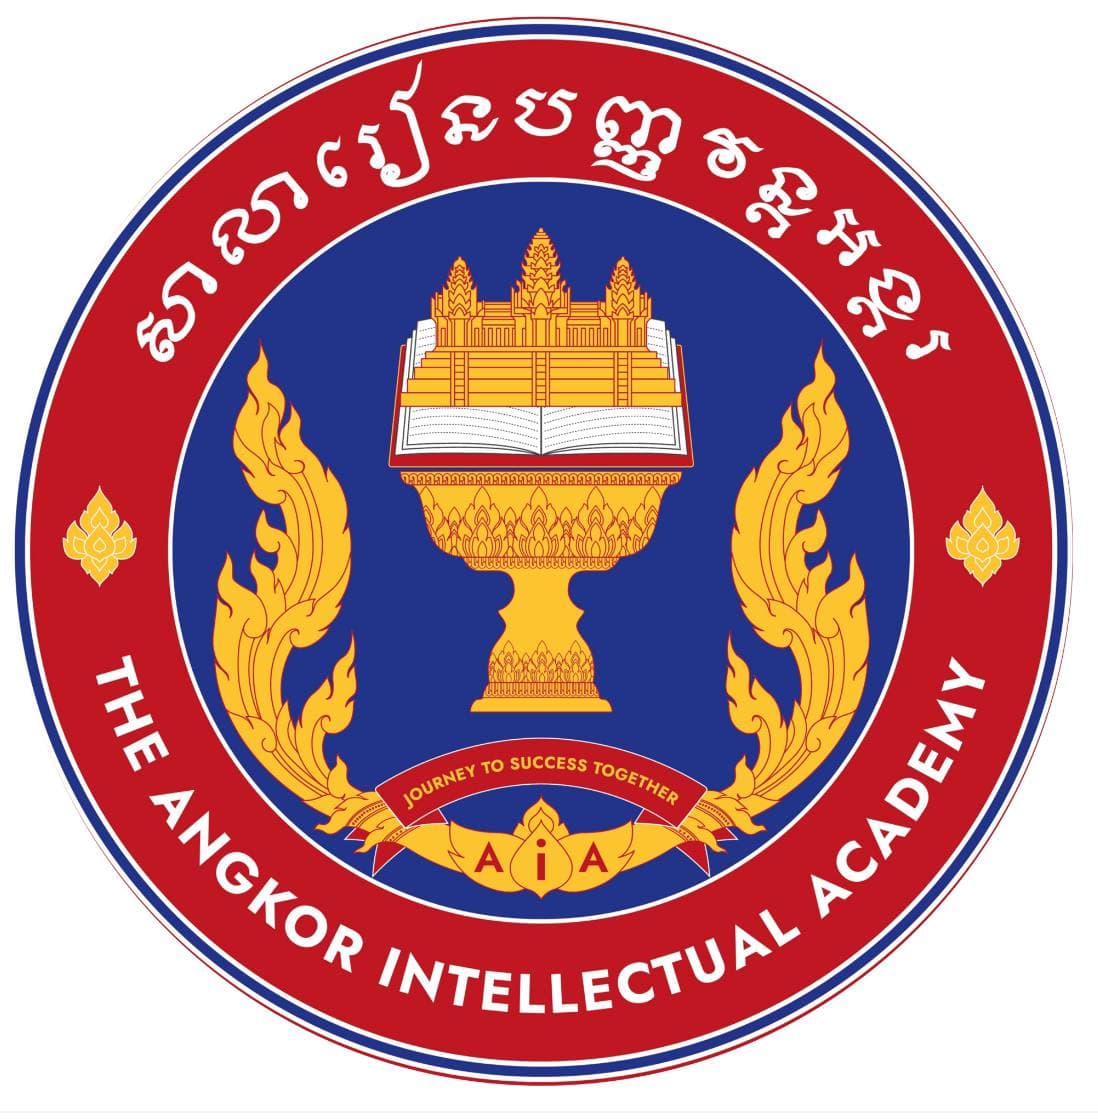 The Angkor Intellectual Academy - AiA 